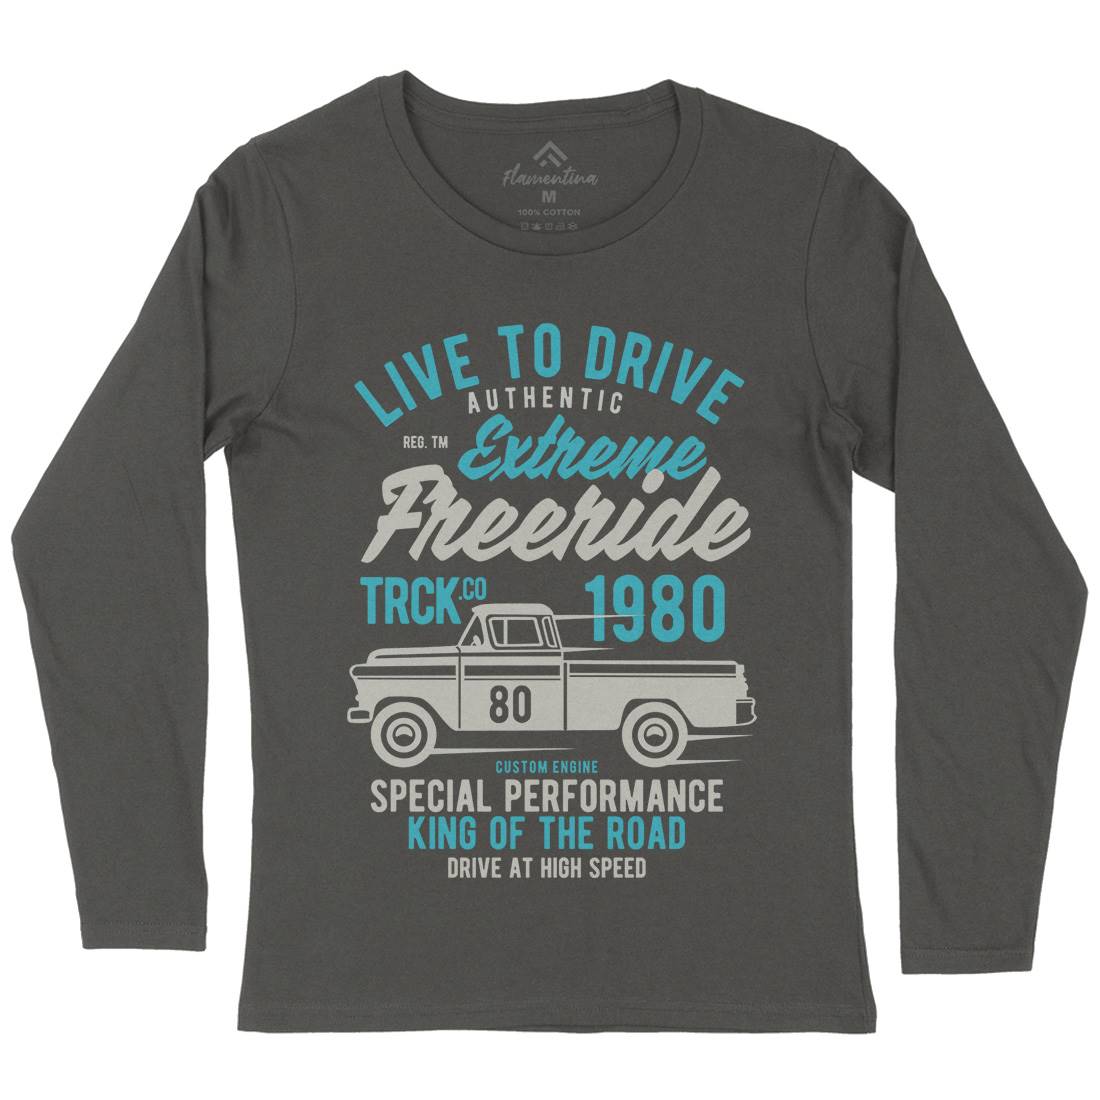 Extreme Freeride Truck Womens Long Sleeve T-Shirt Cars B401